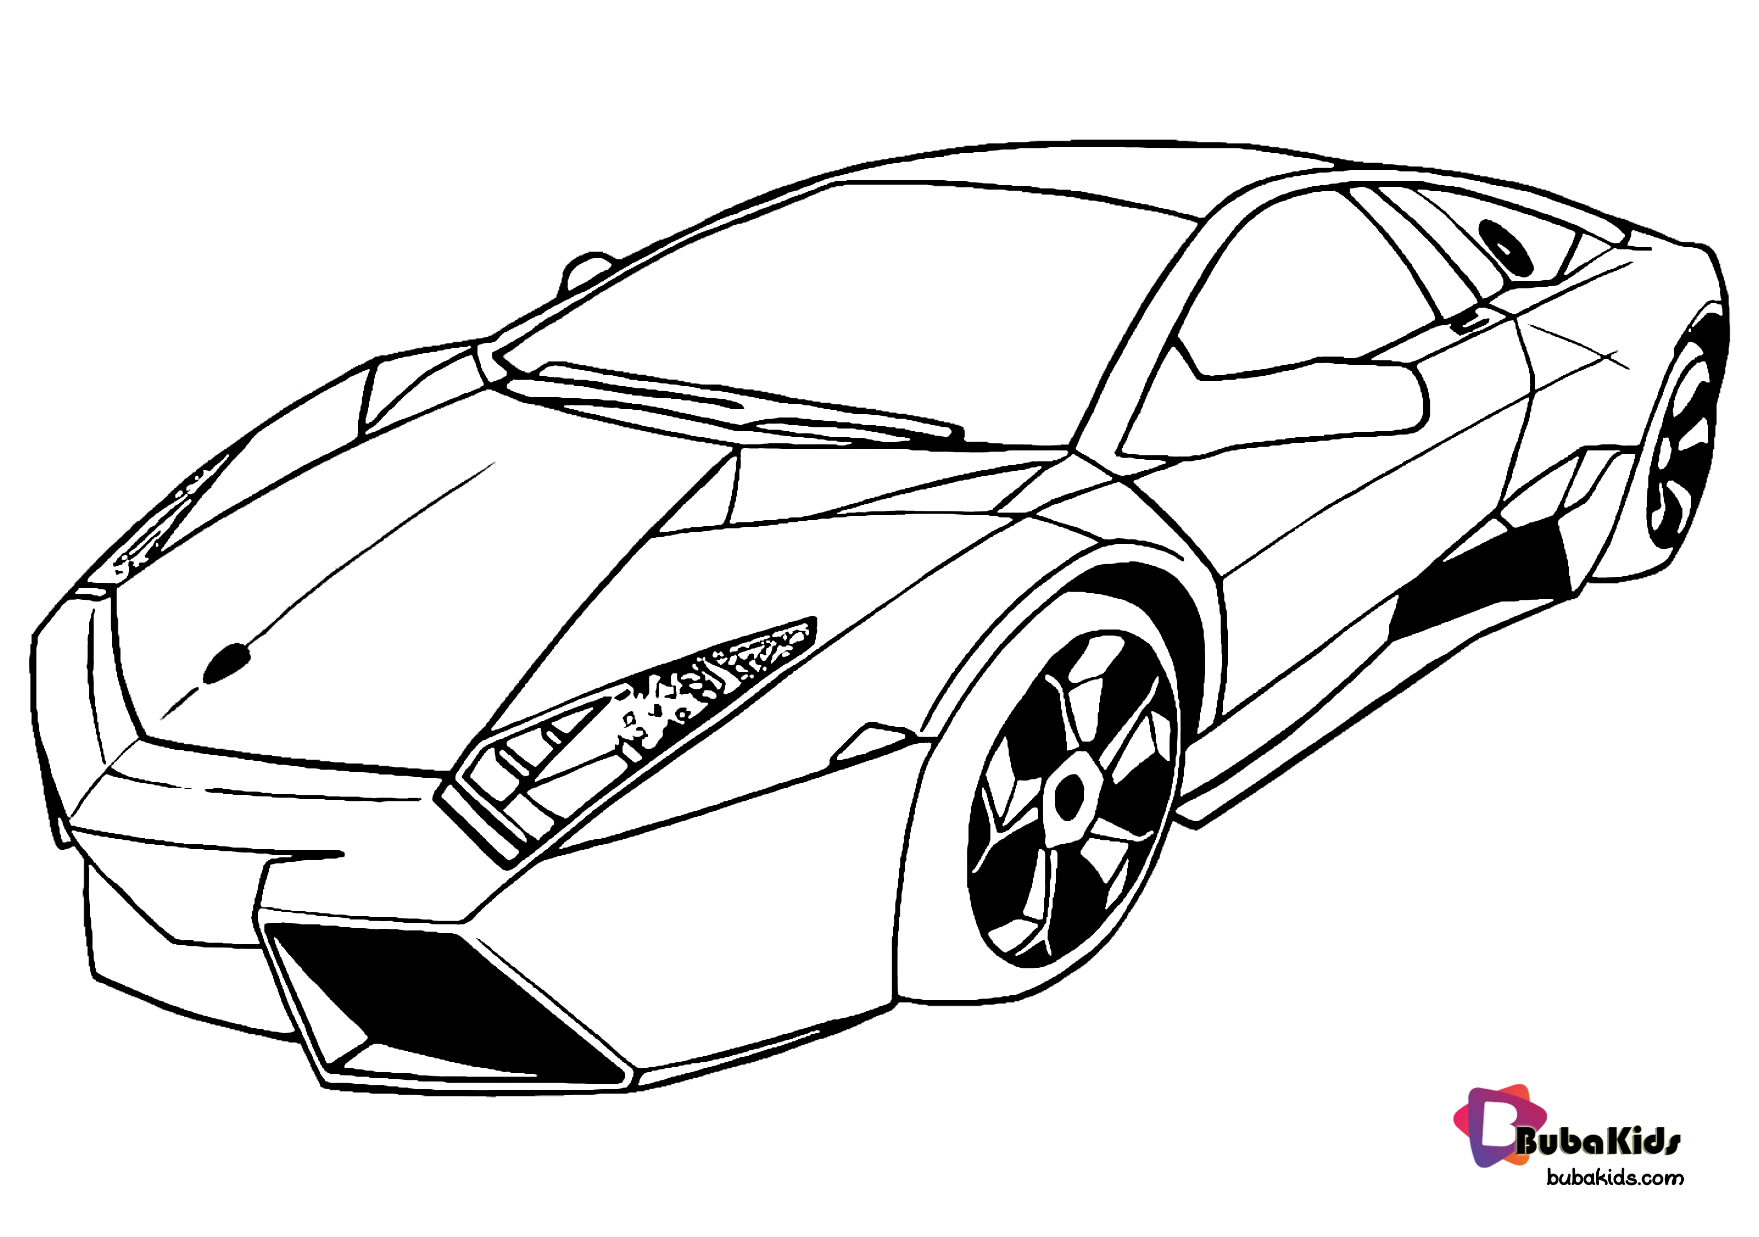 free-download-and-printable-super-car-coloring-page-in-2020-cars-coloring-page-coloring-page